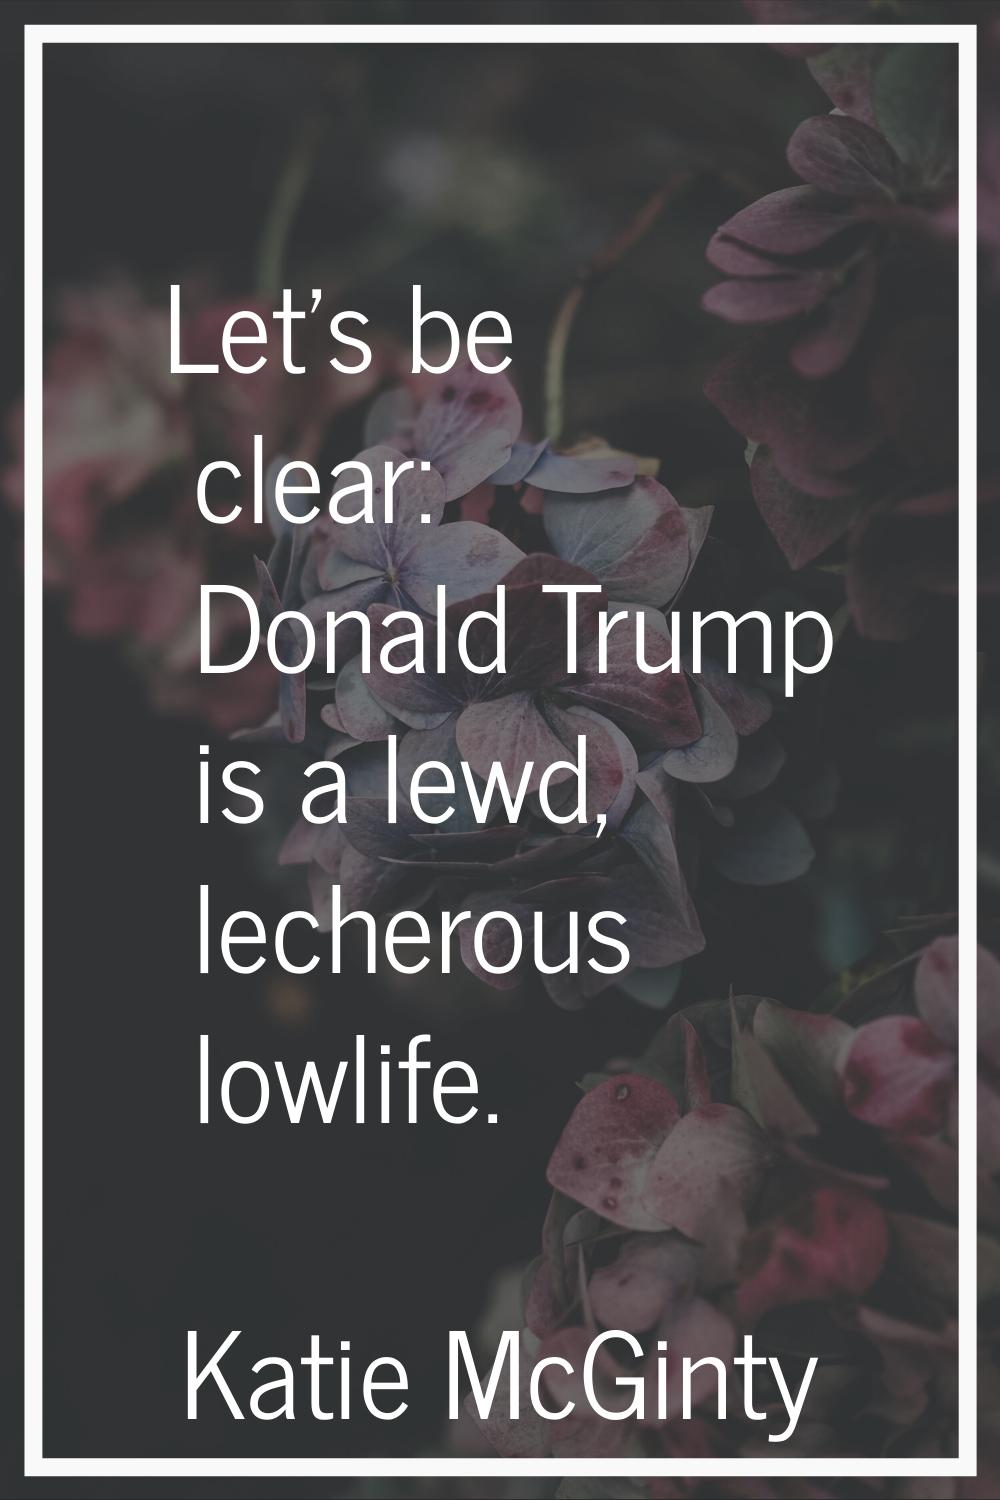 Let's be clear: Donald Trump is a lewd, lecherous lowlife.